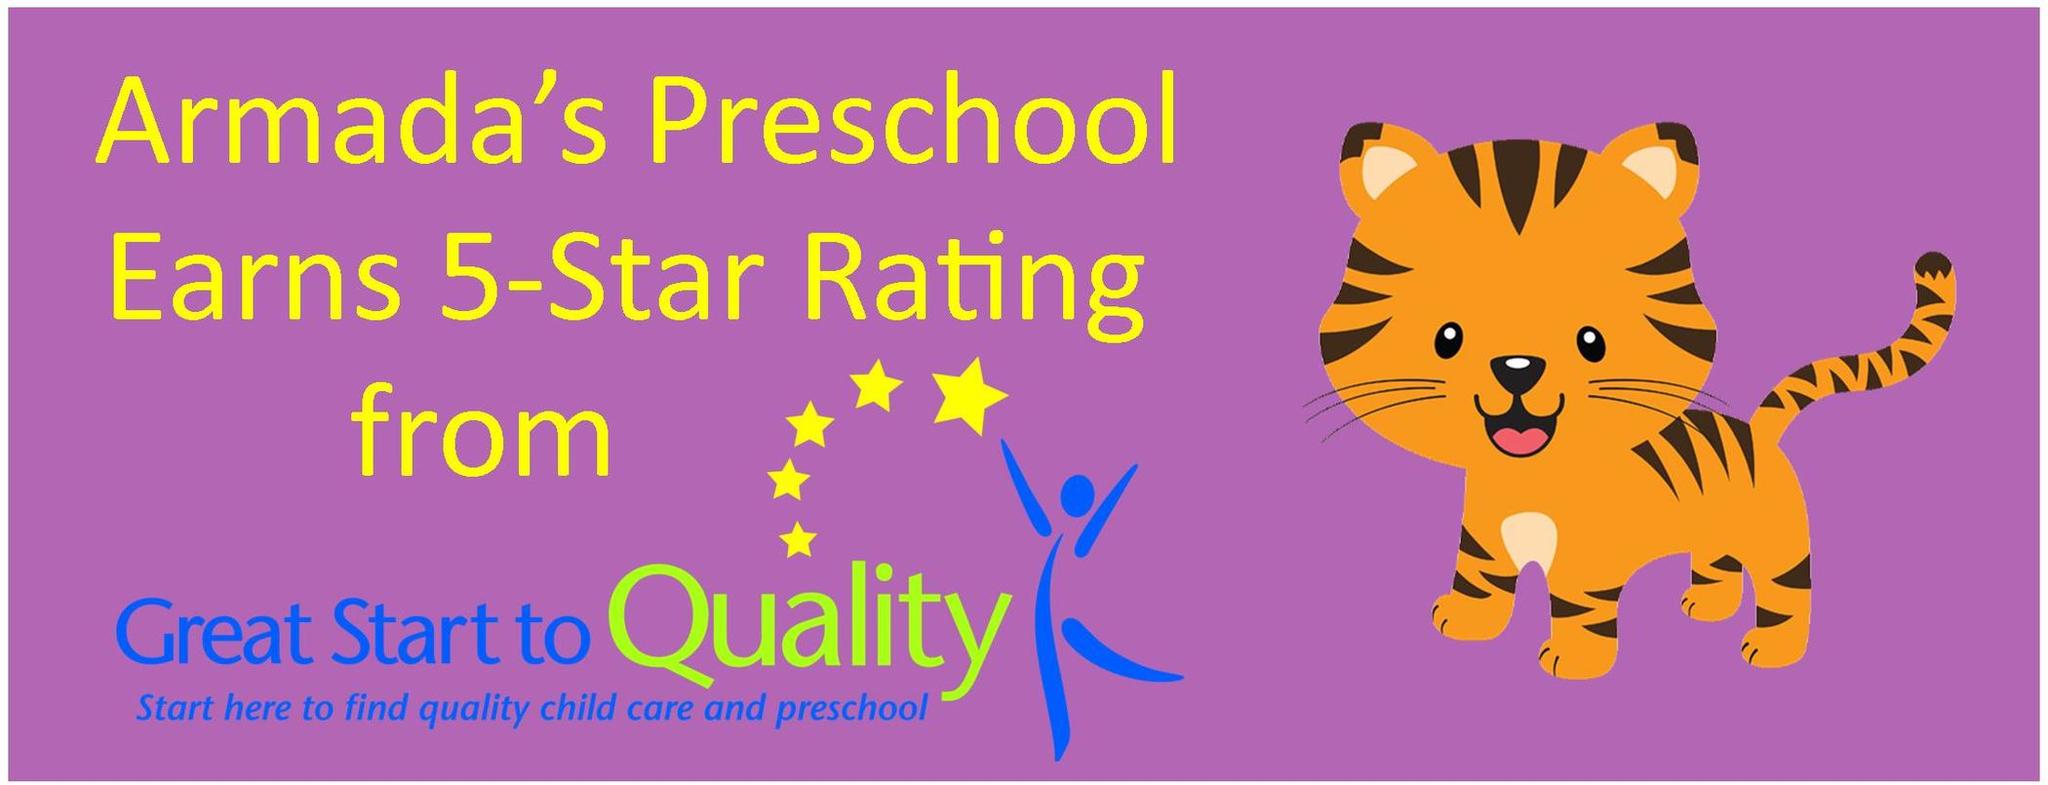 Armada's Preschool Earns Prestigious 5 Star Rating from Great Start to Quality